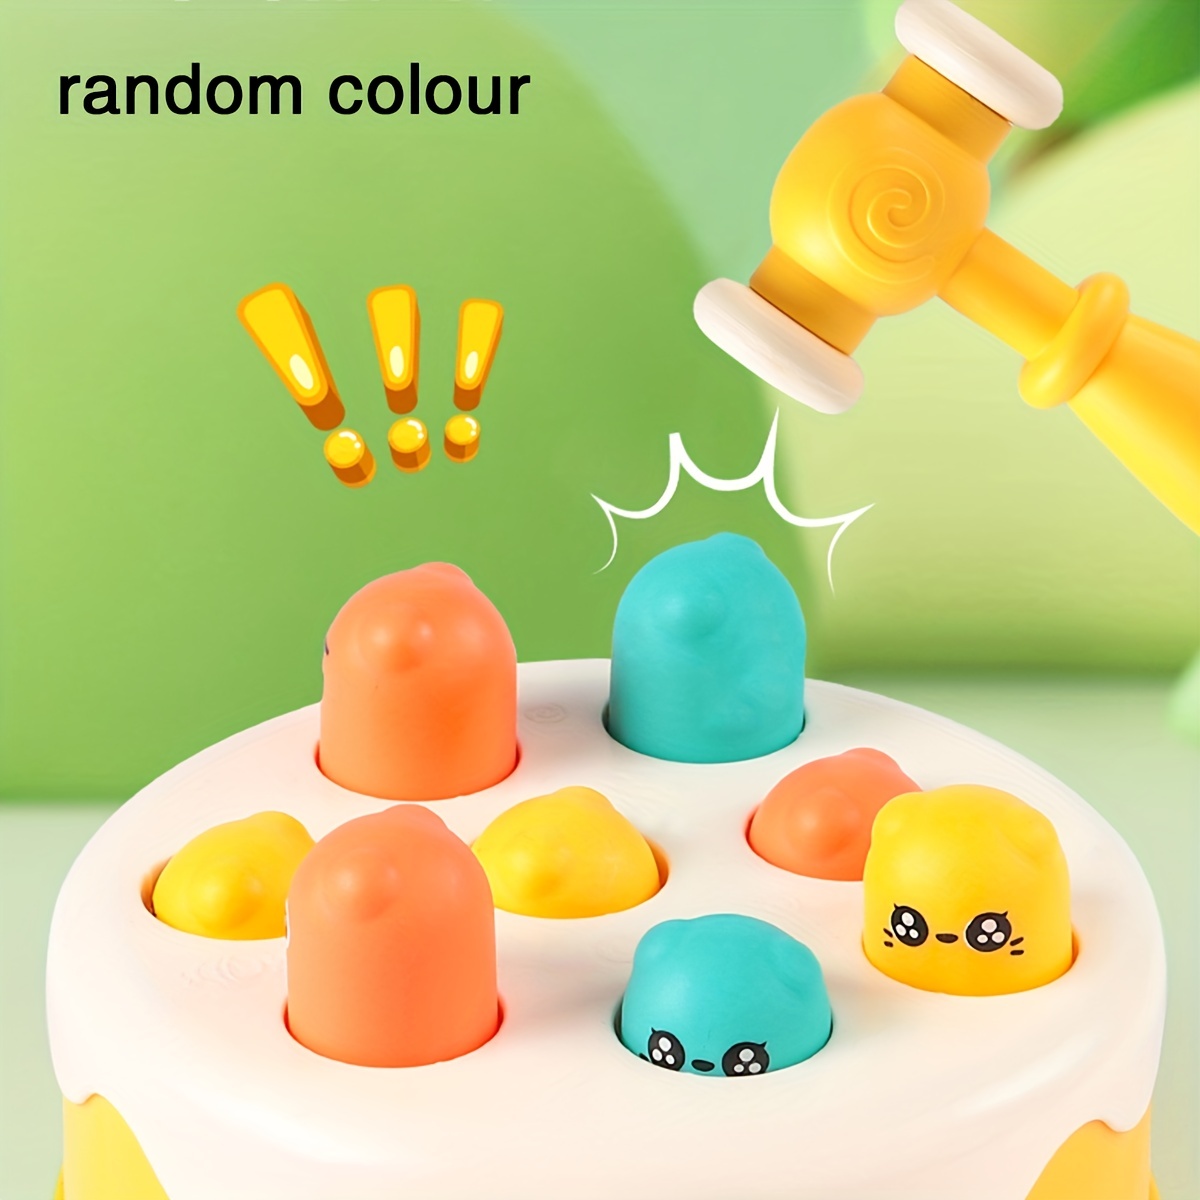 1pc Random Color Cake Coloring Tool